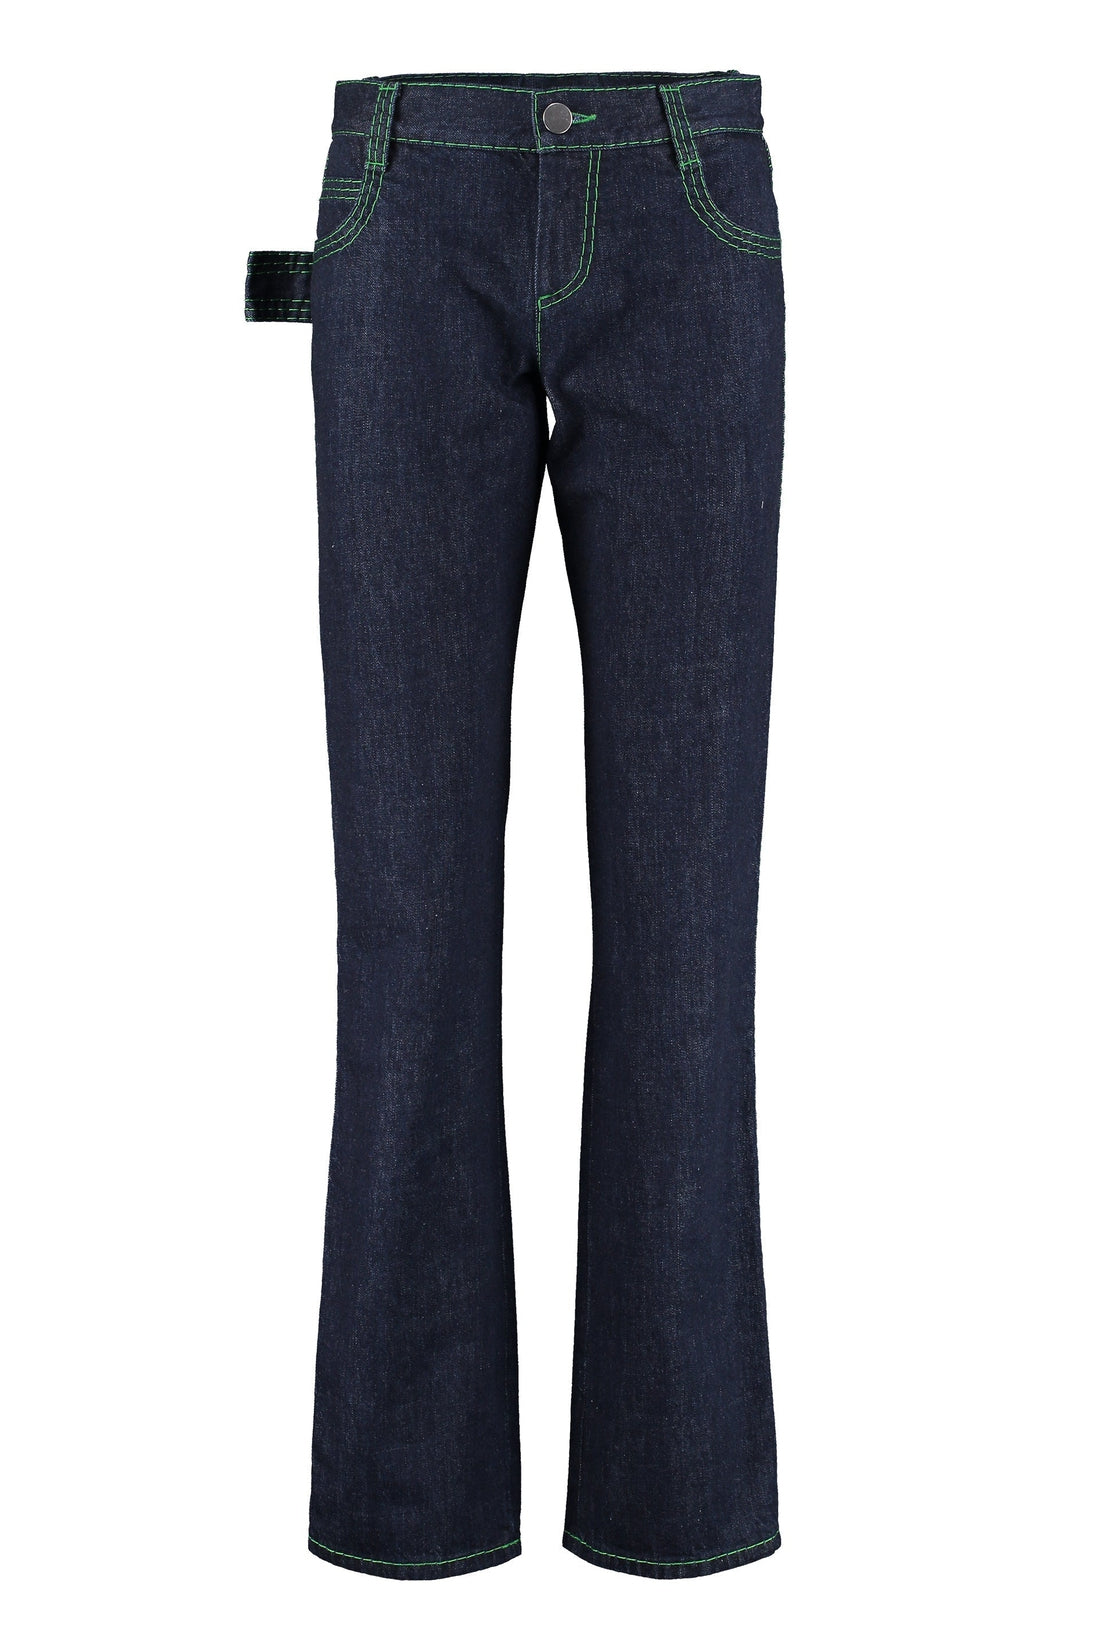 Bottega Veneta-OUTLET-SALE-5-pocket jeans-ARCHIVIST